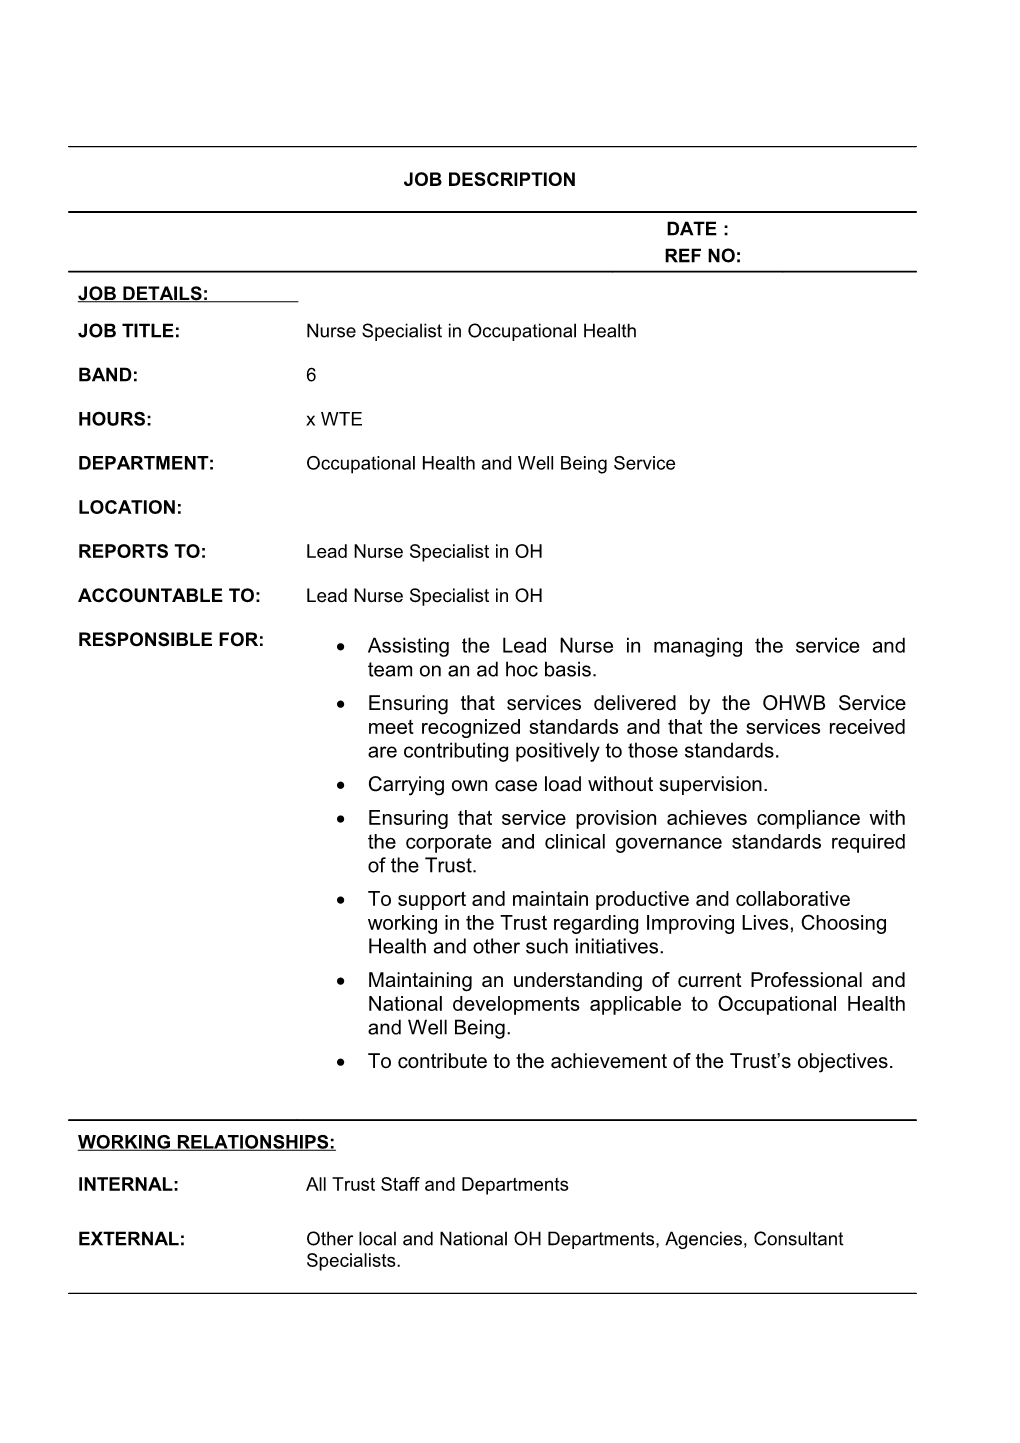 Job Matching / Evaluation Request Form